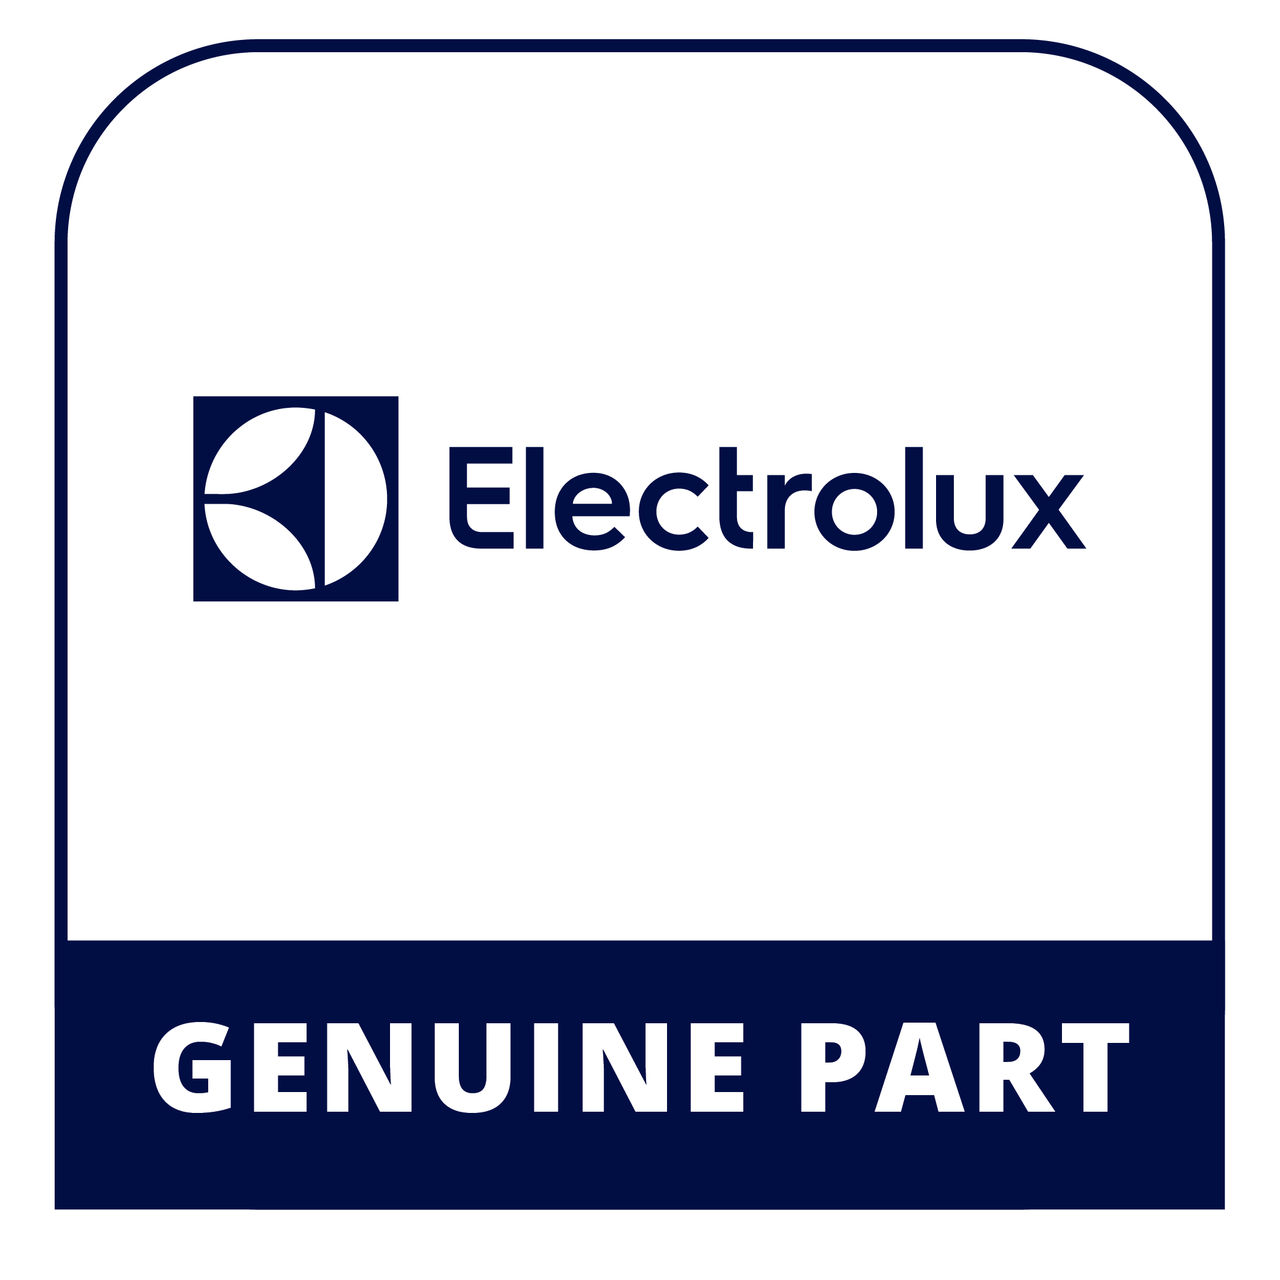 Frigidaire - Electrolux 316231800 Cover - Genuine Electrolux Part